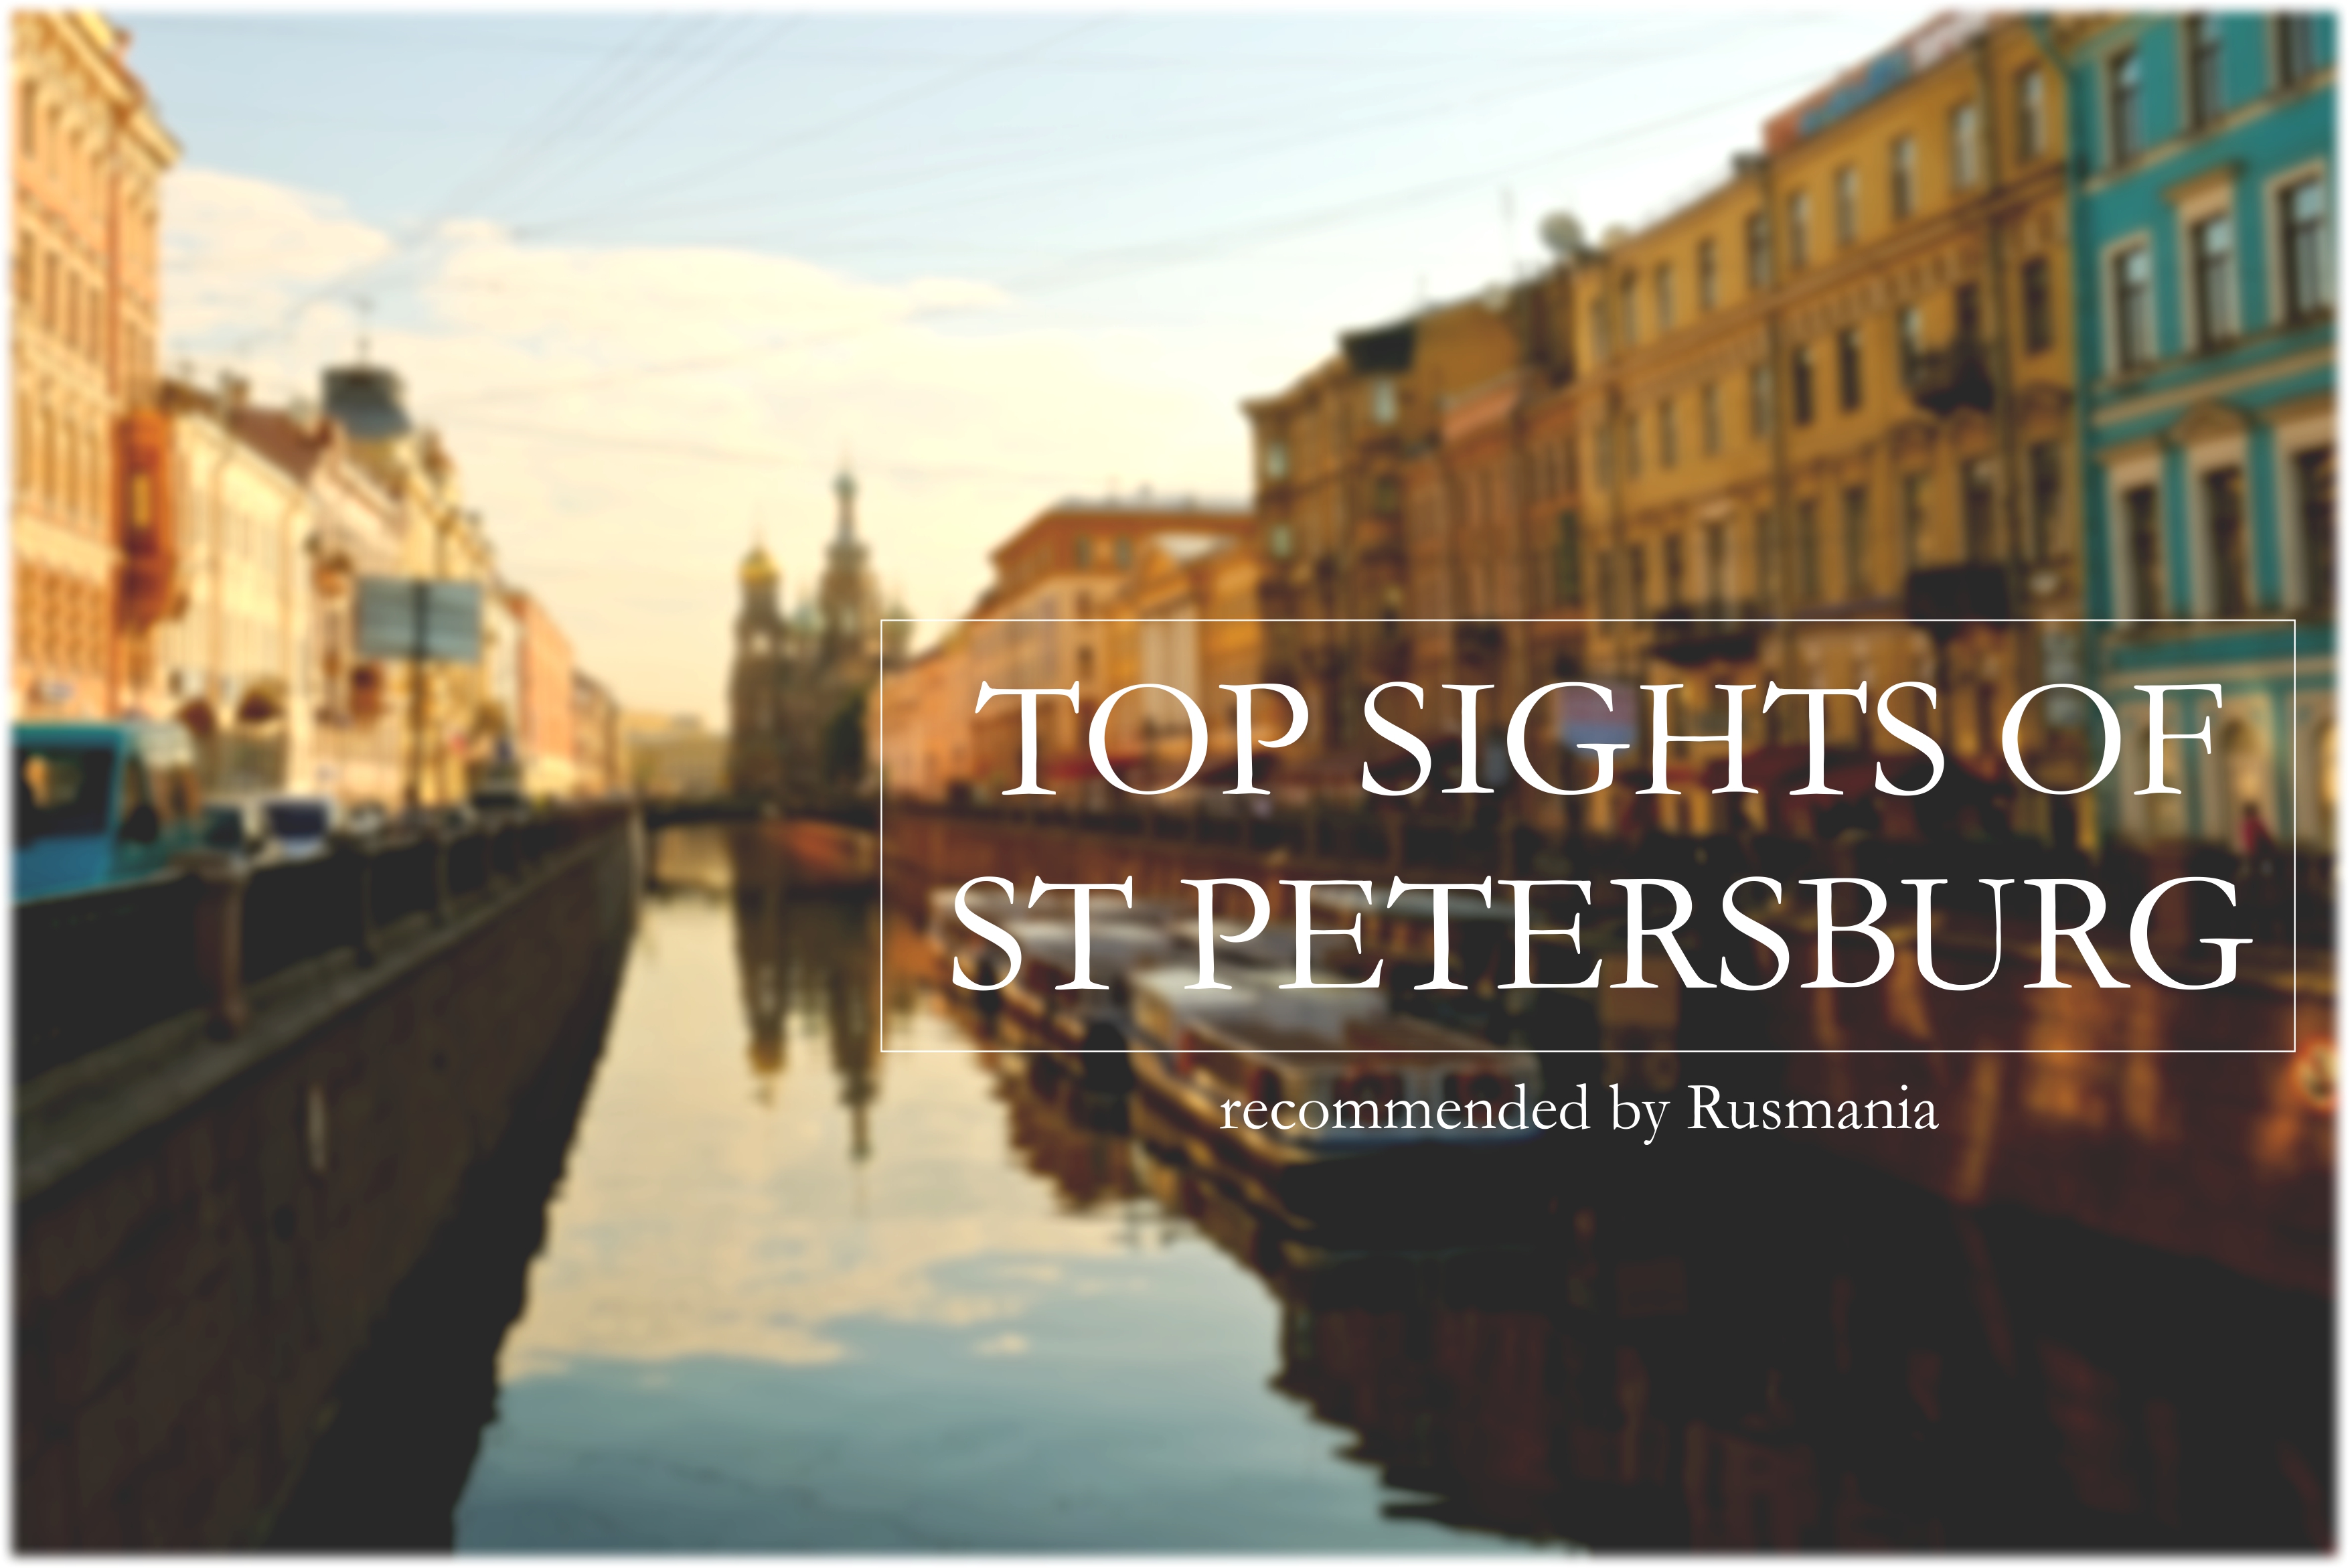 Top sights of St Petersburg